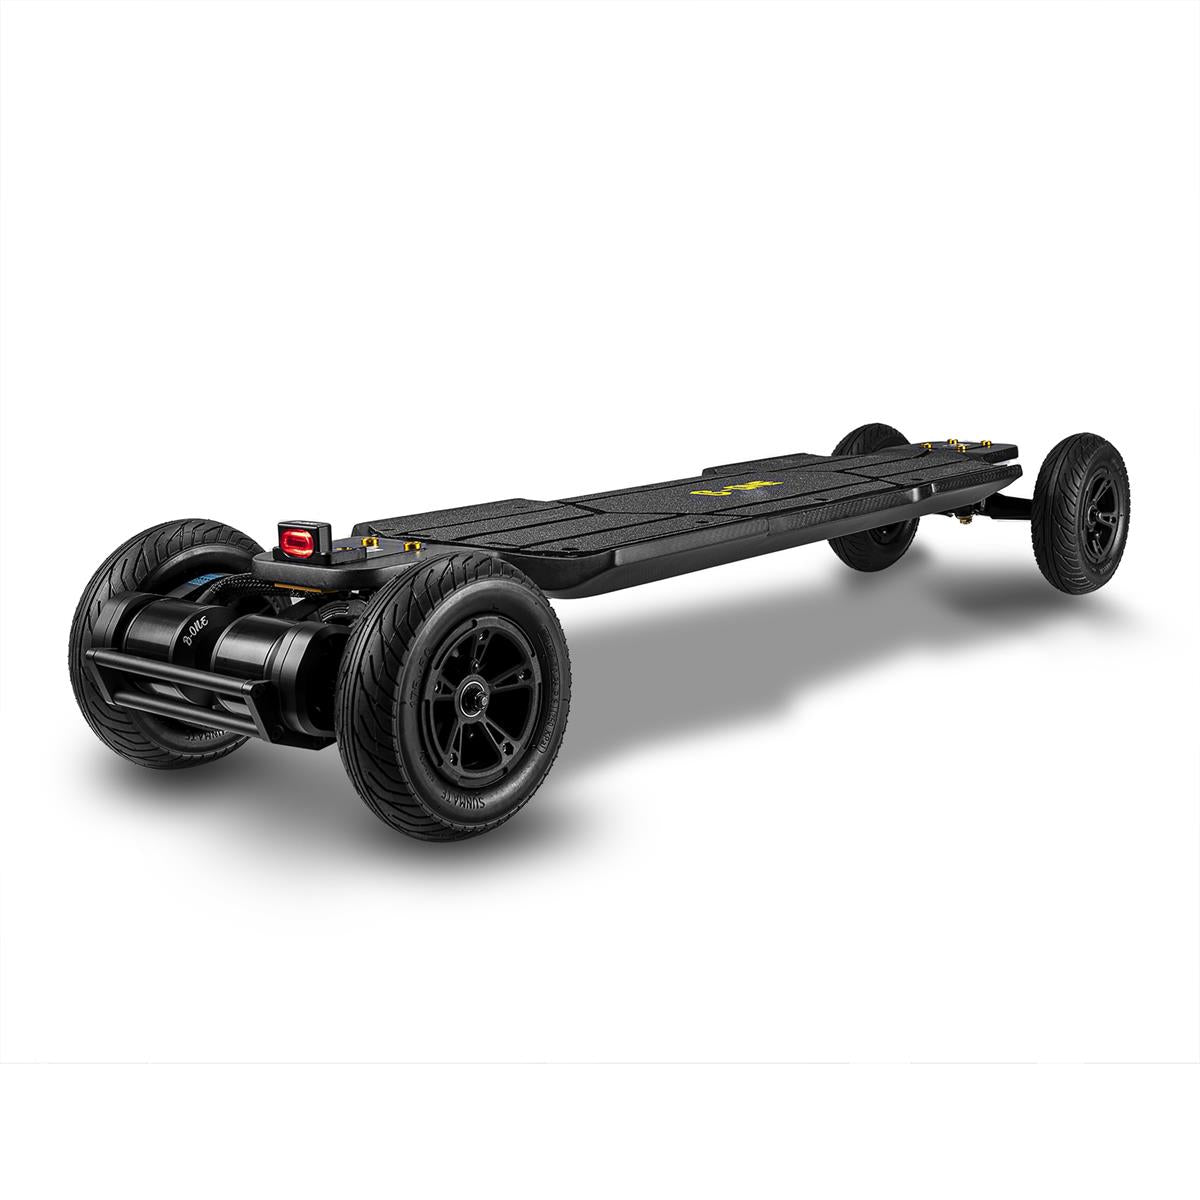 Hercules Carbon Electric Skateboard (Carbon fiber)